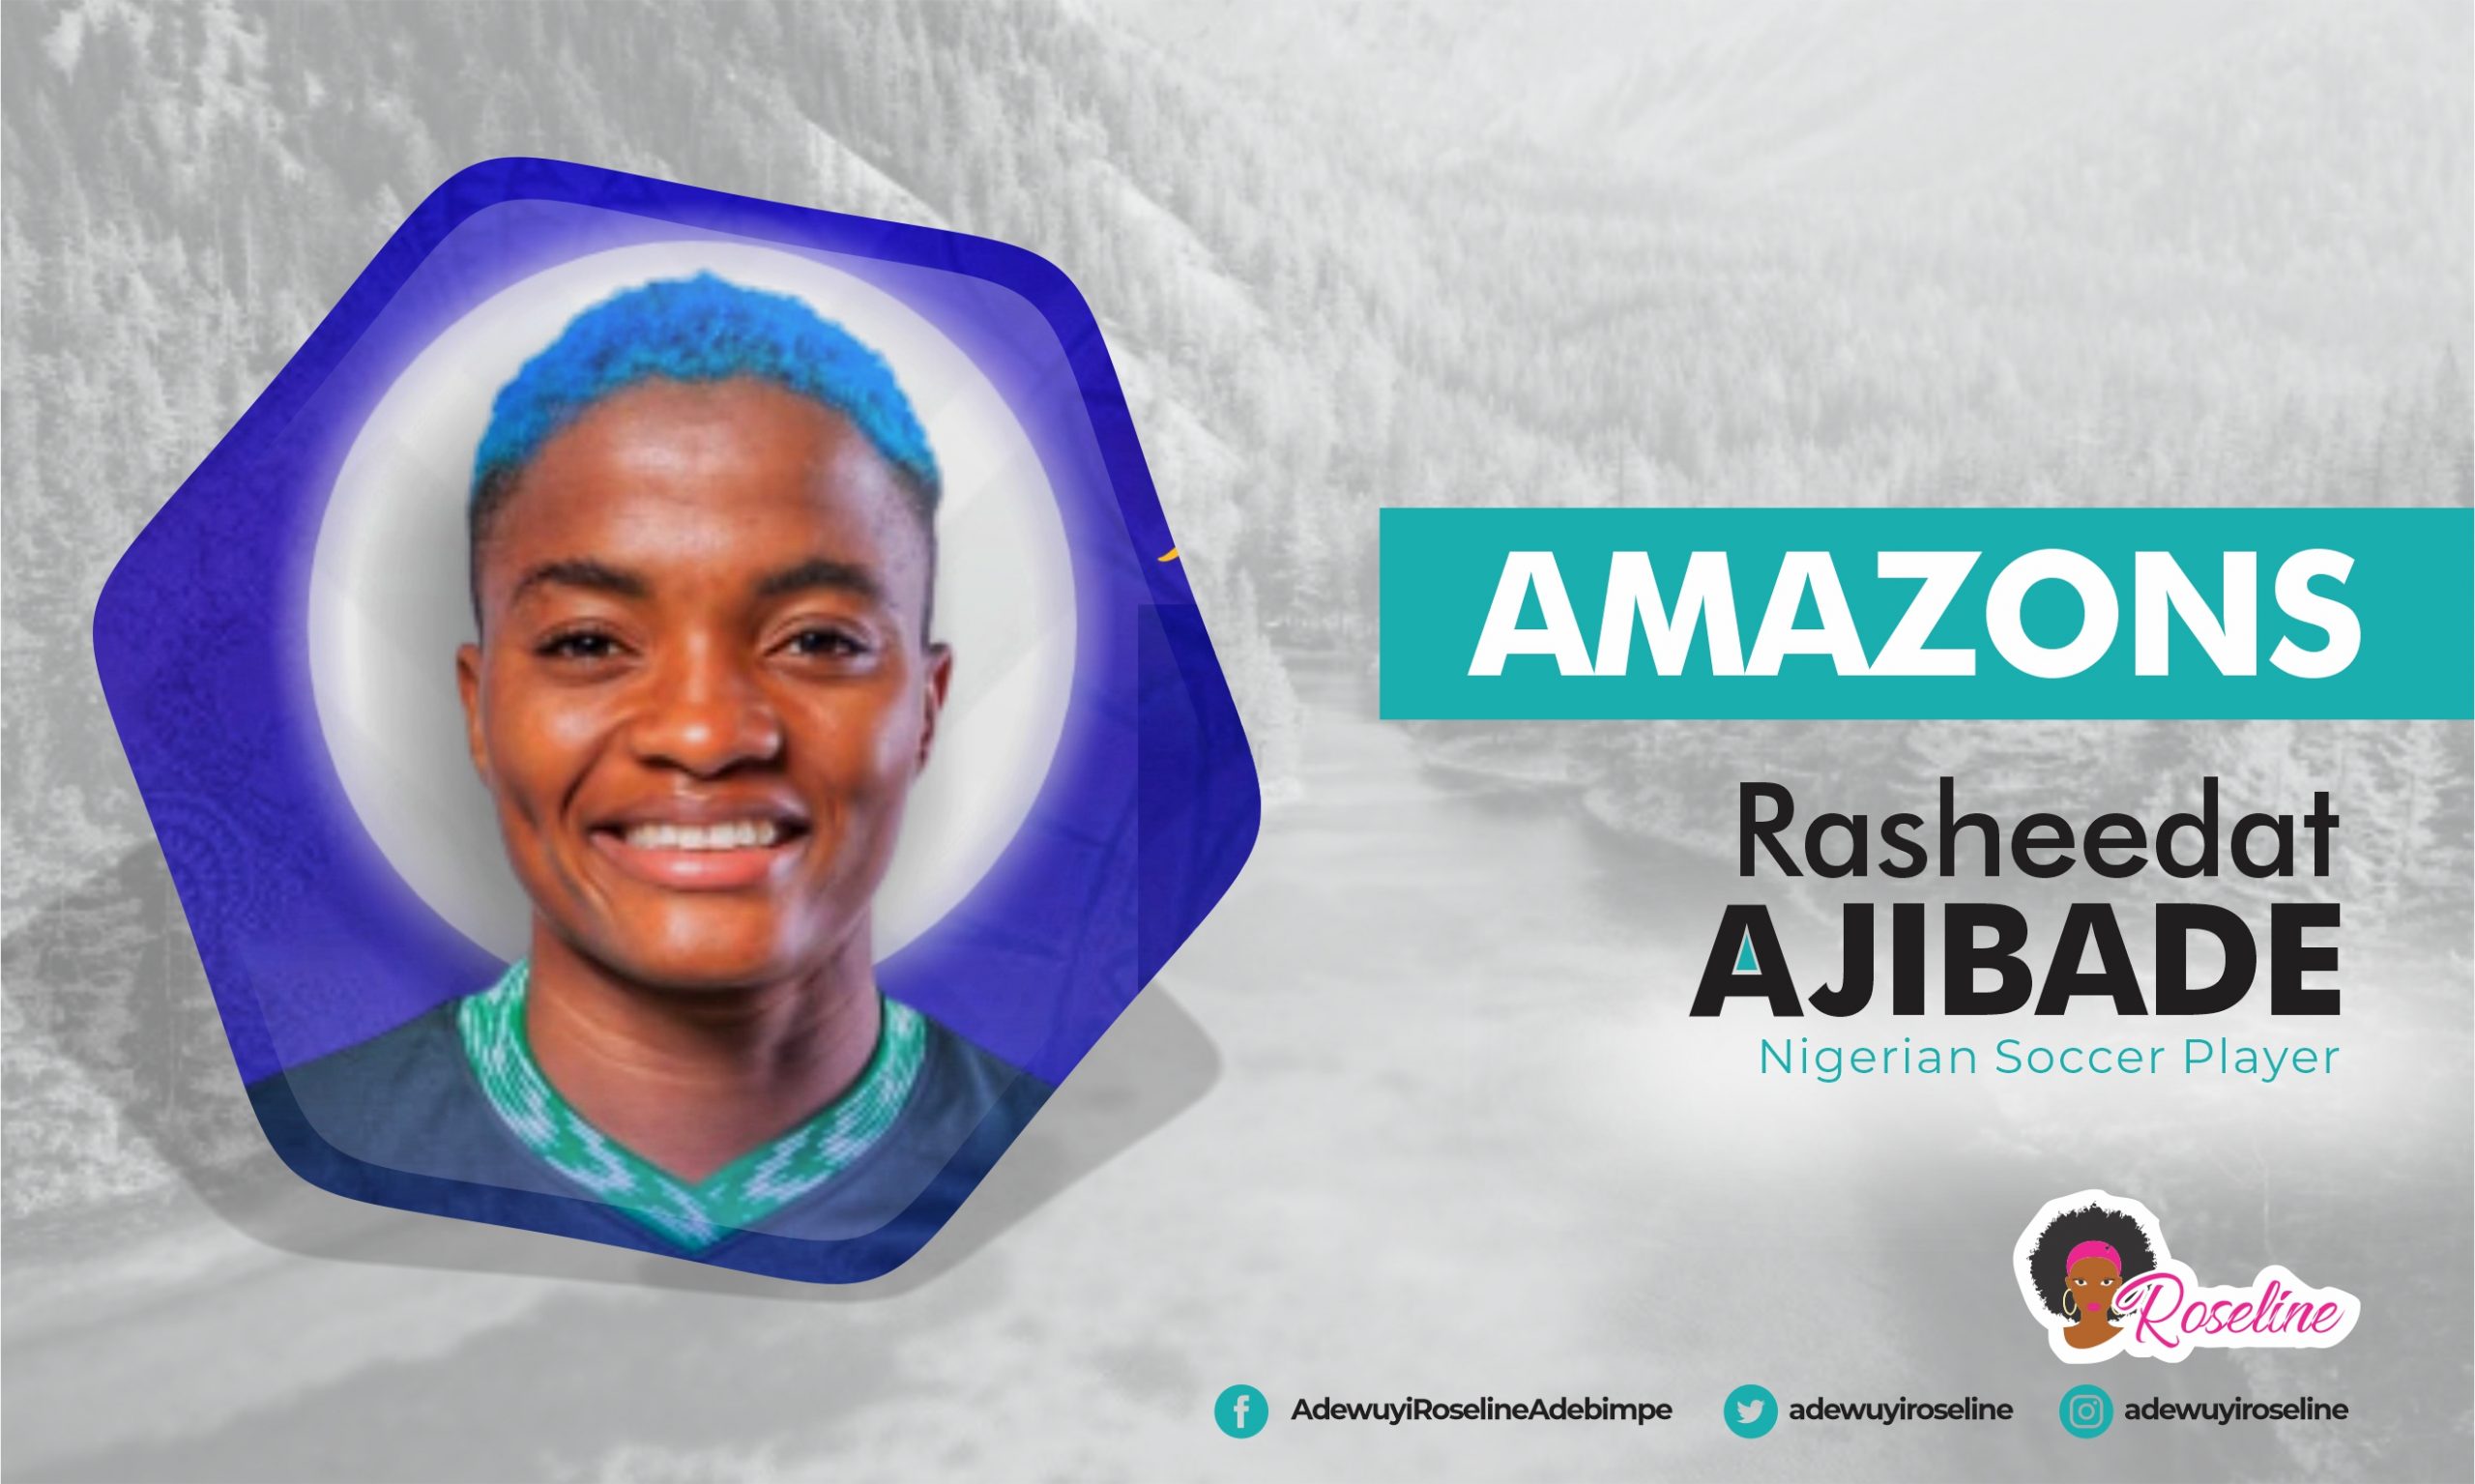 Amazons 7 -Rasheedat Ajibade